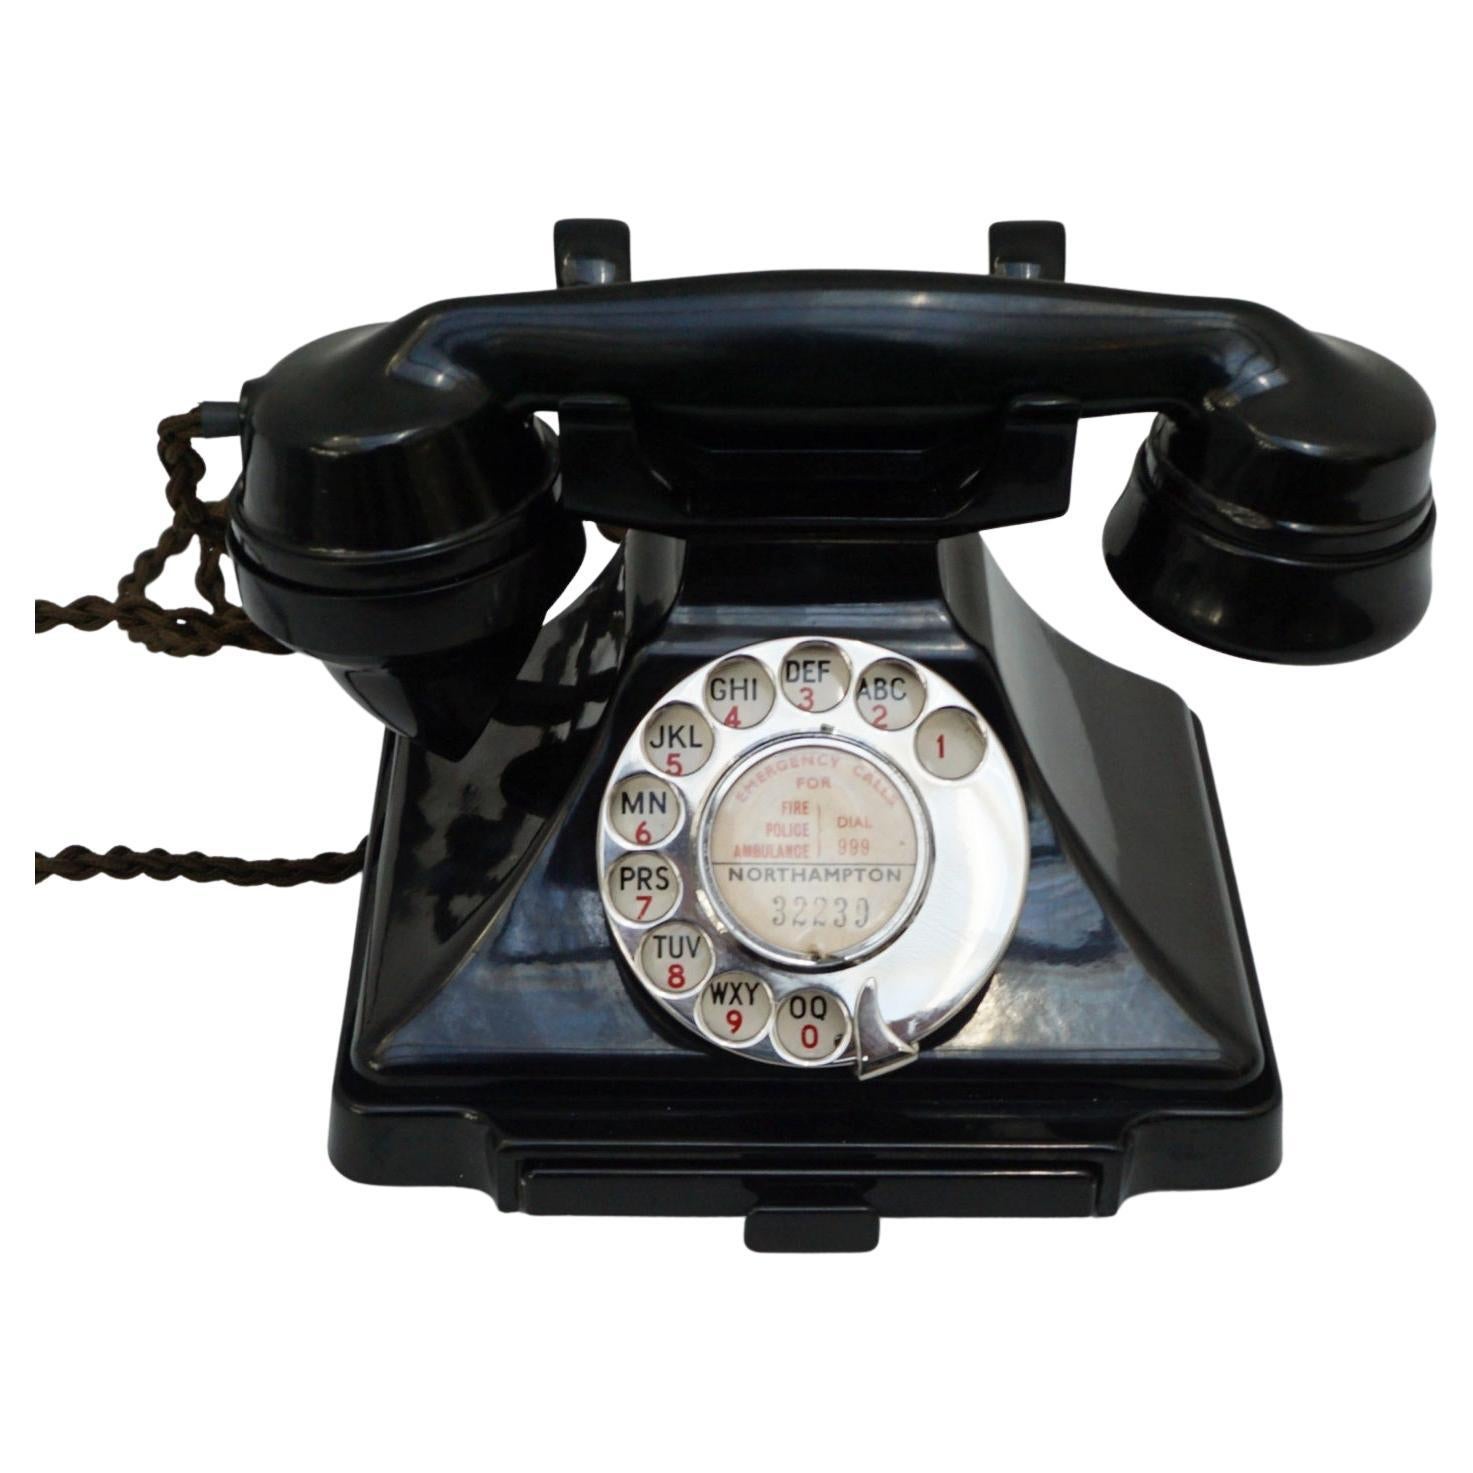 Original GPO Model 232L Black Bakelite Telephone Circa 1930